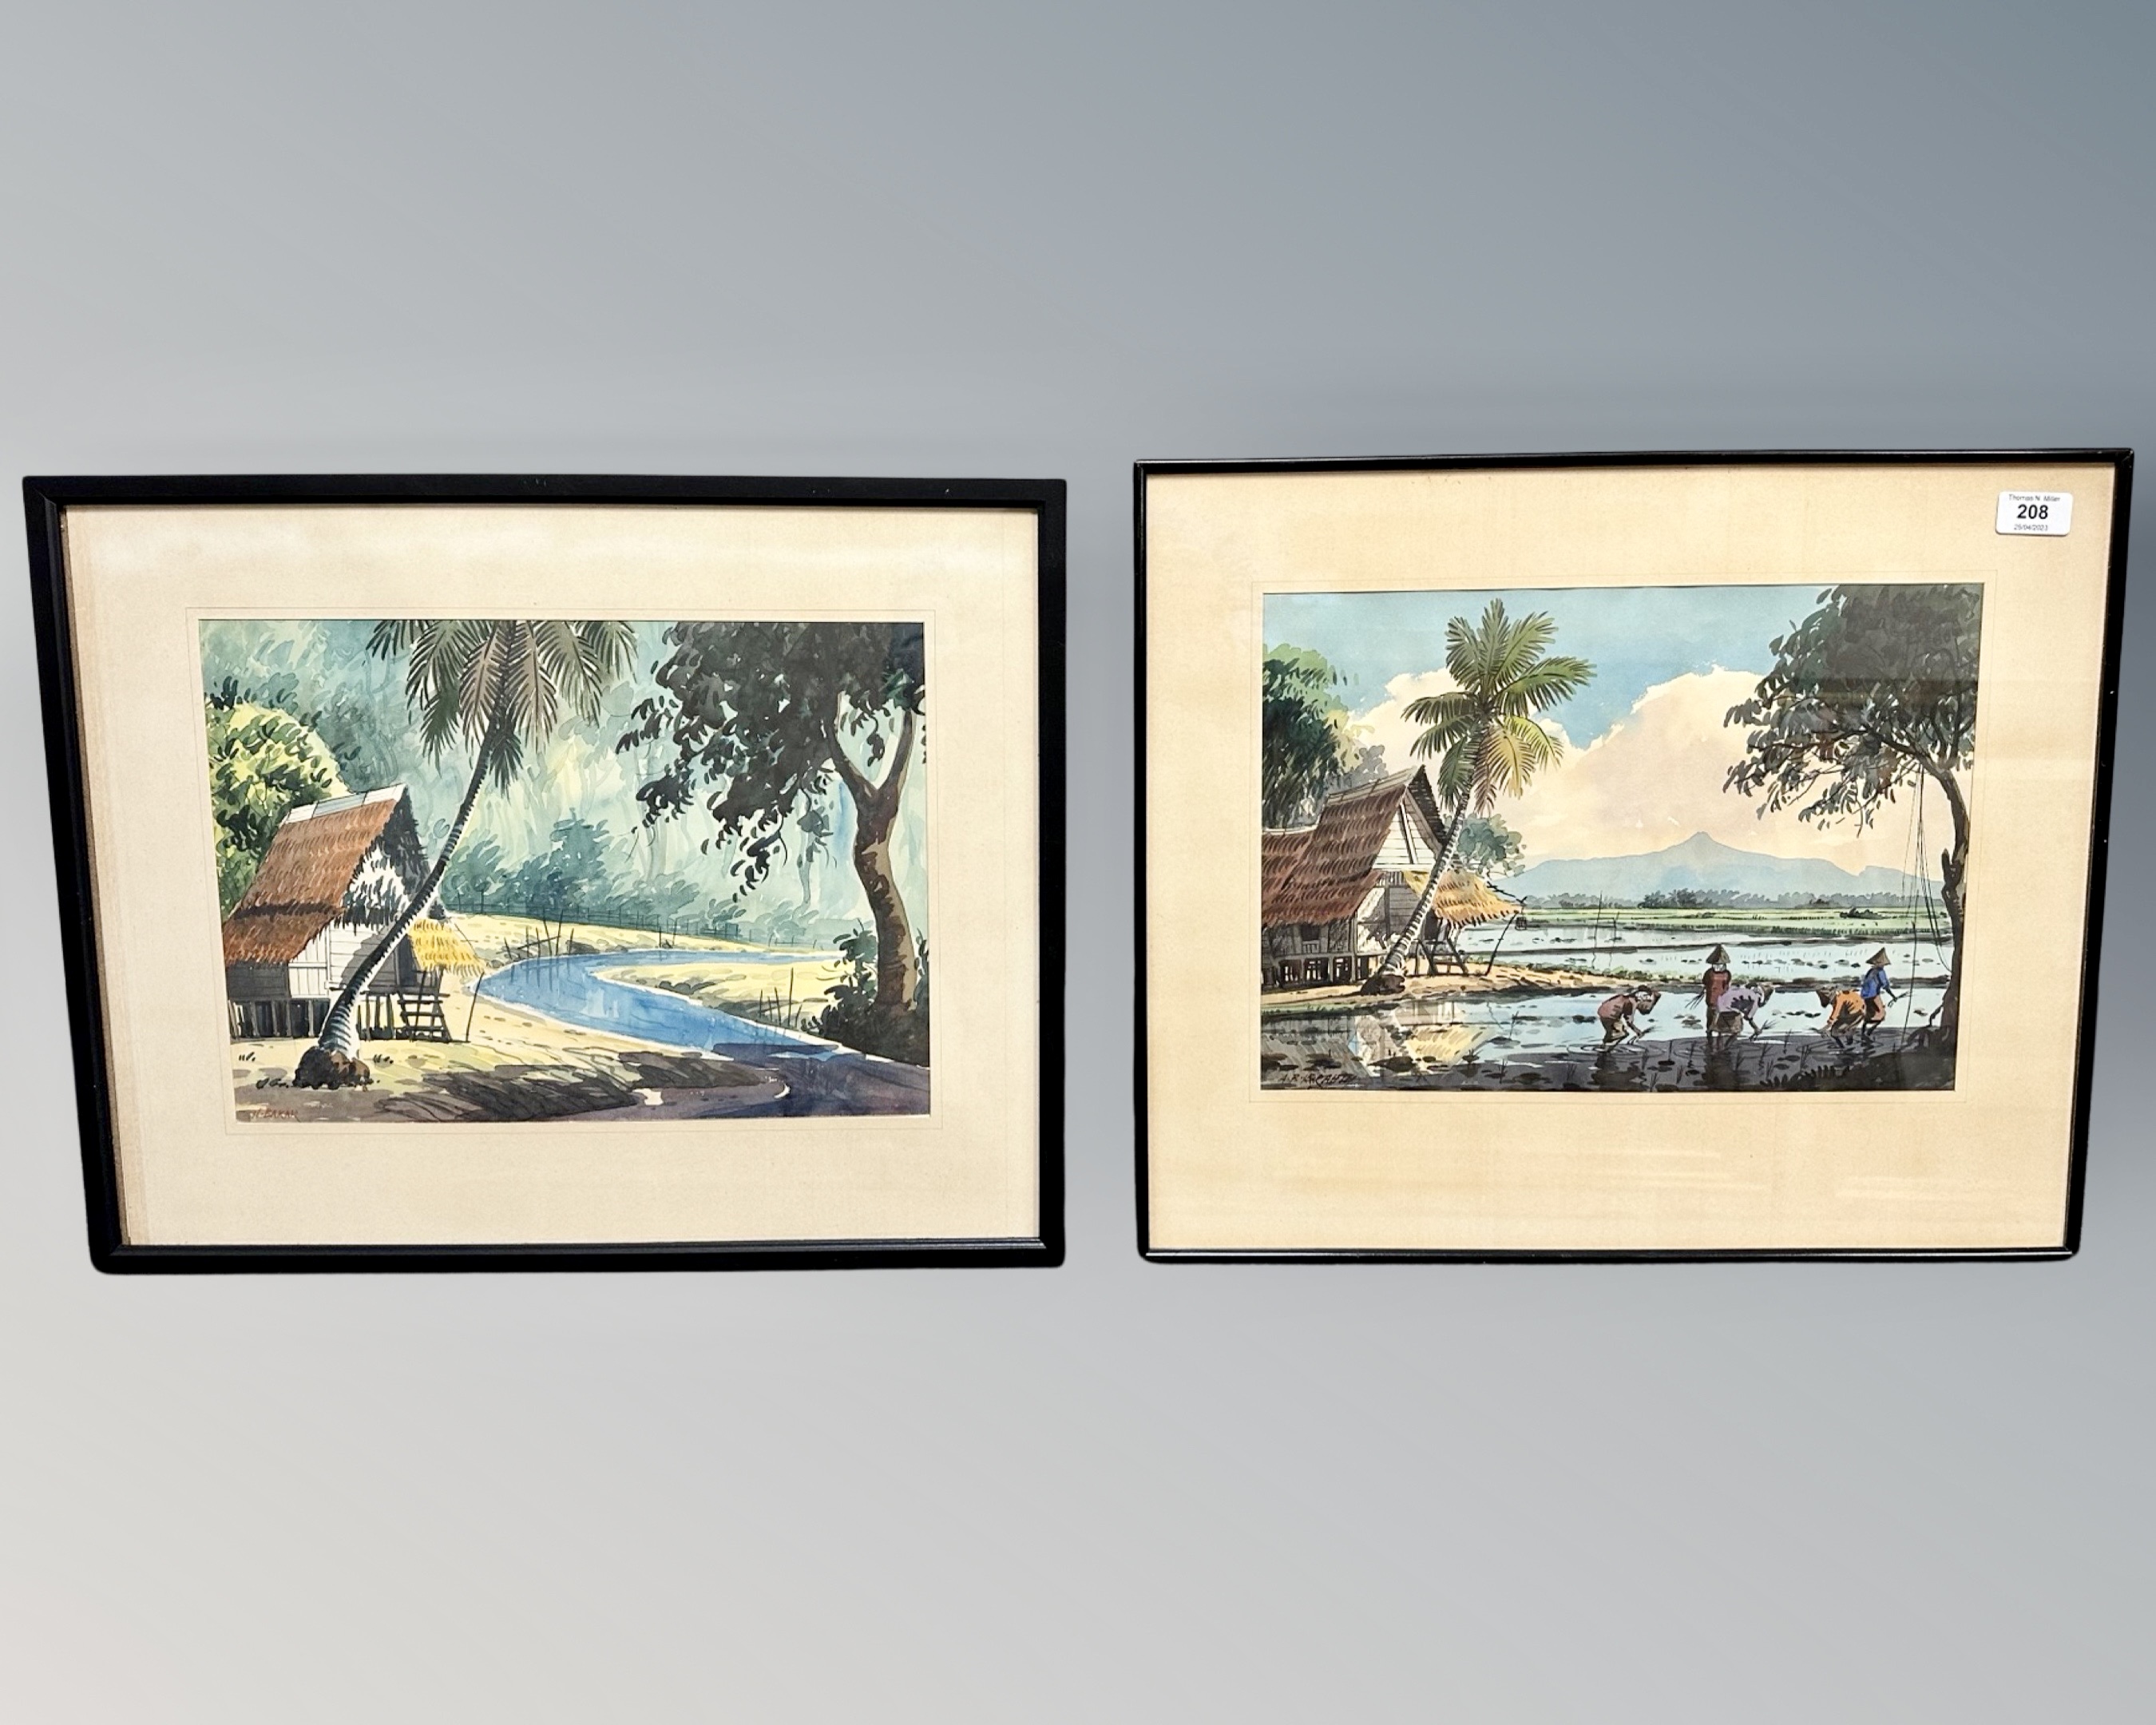 Abu Bakar Ibrahim (Malaysian, 1925-1977) Two Malaysian village scenes, watercolours, each 37.